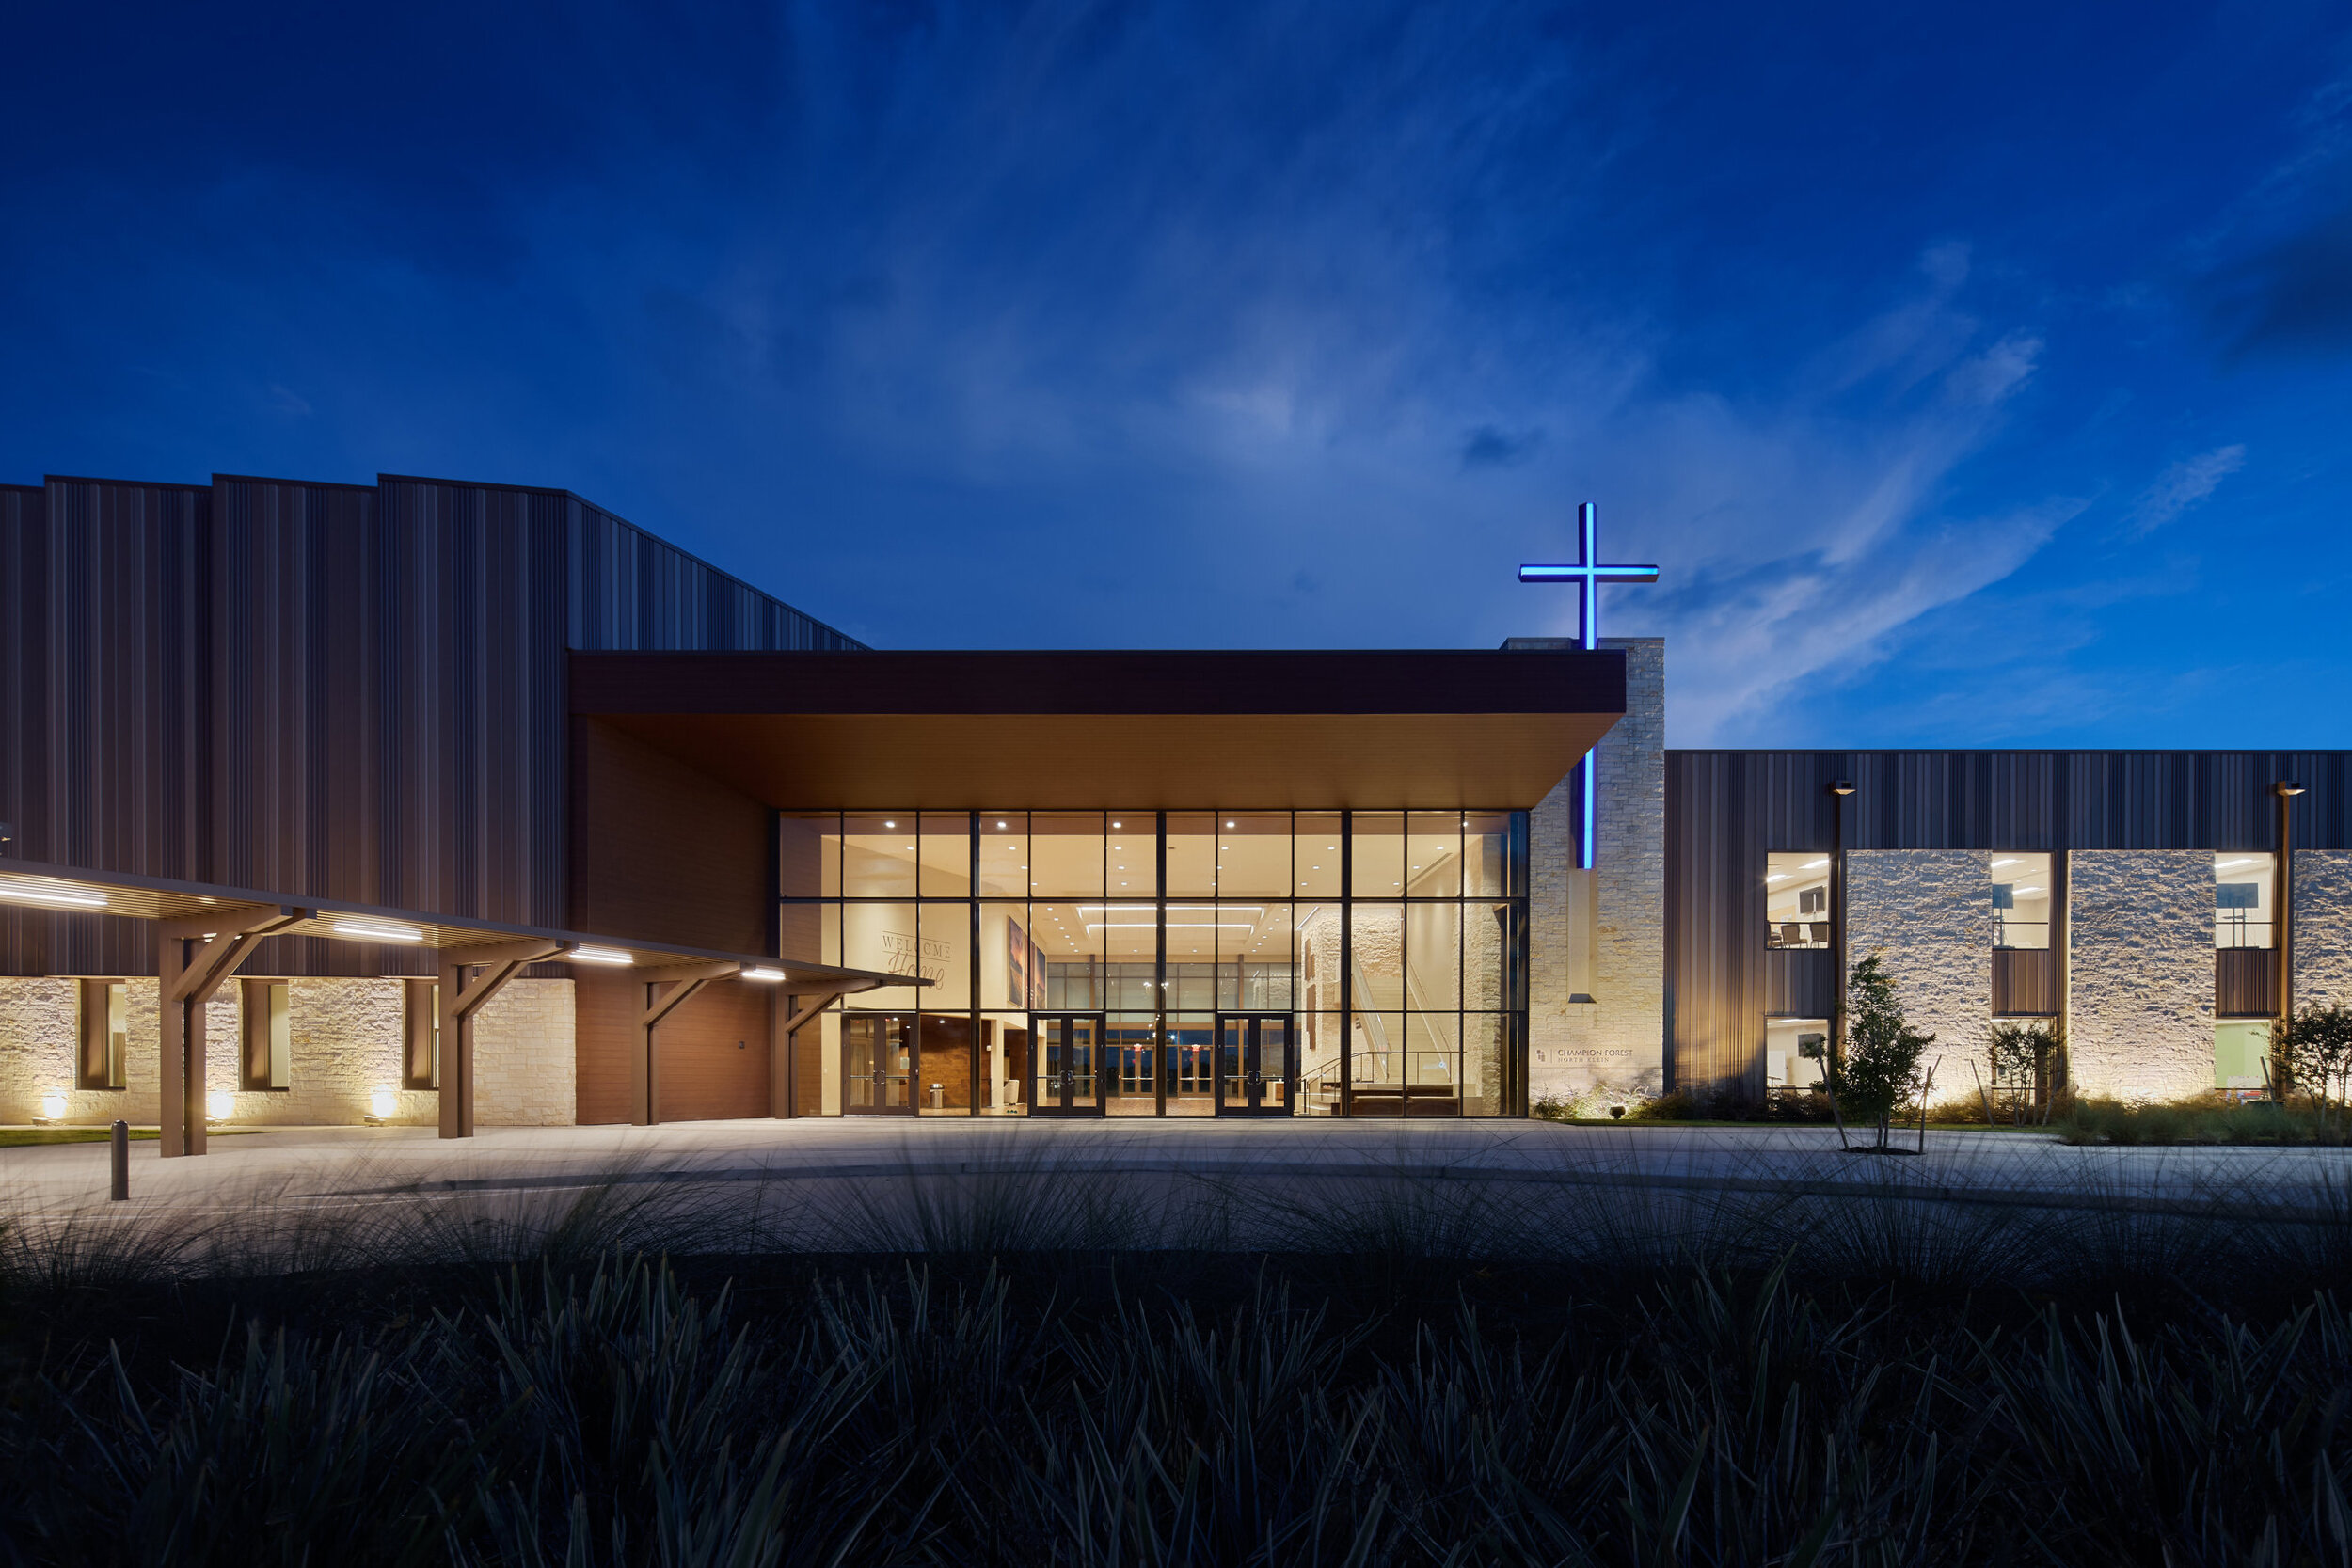   CHAMPION FOREST BAPTIST CHURCH   KIRKSEY ARCHITECTURE  SPRING, TX  © JONATHAN DEAN 